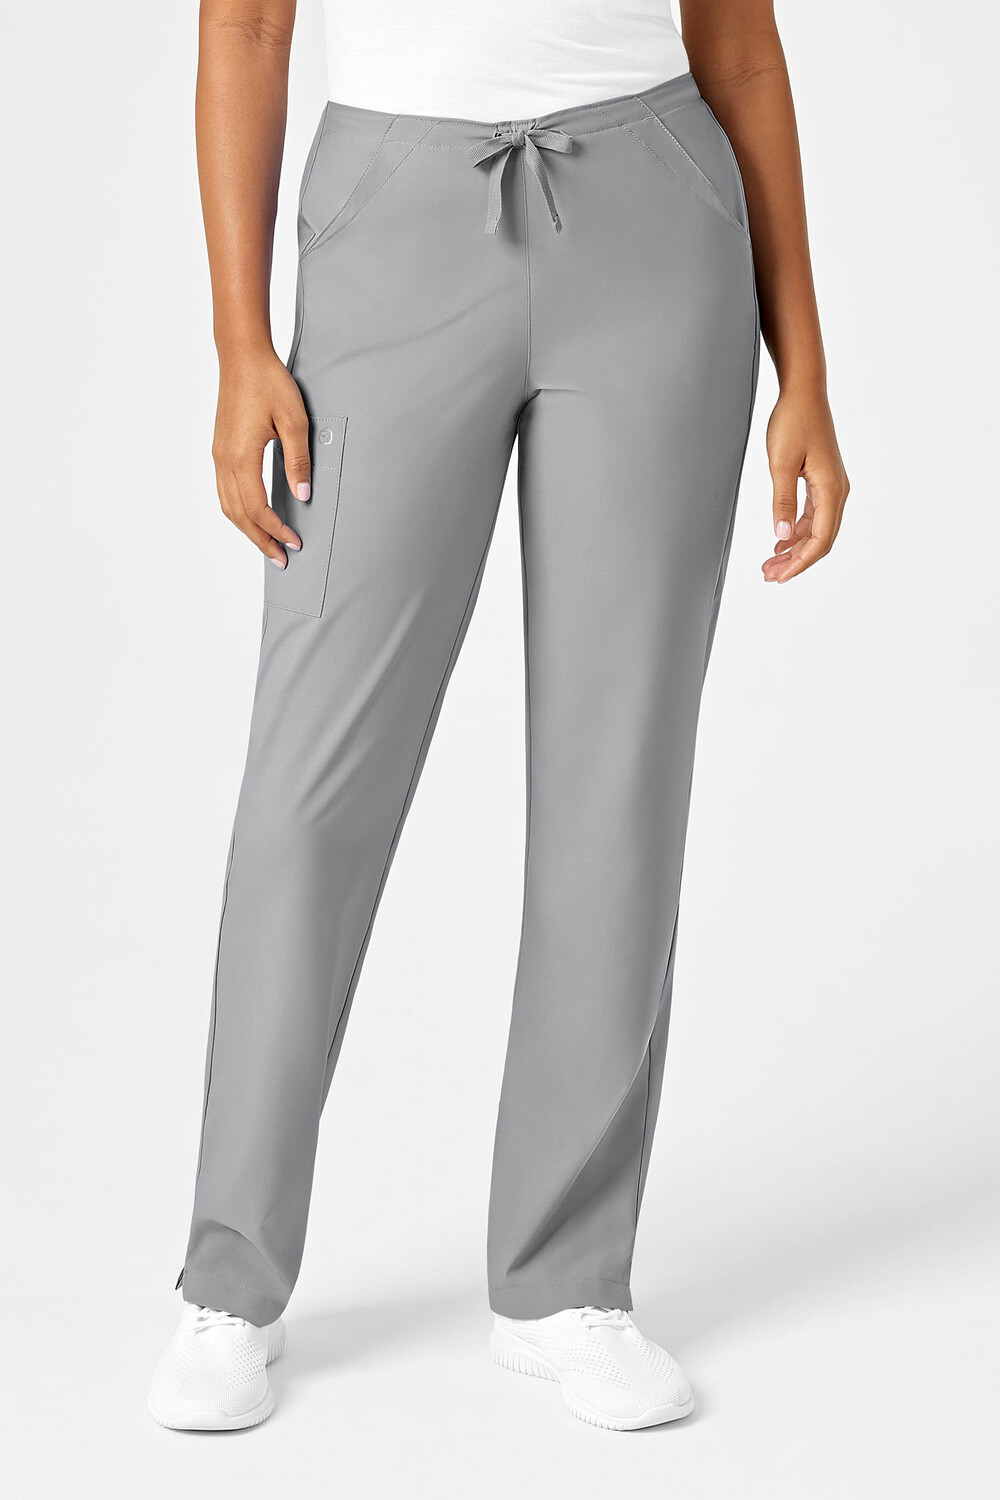 Pantalone donna 5255 grey